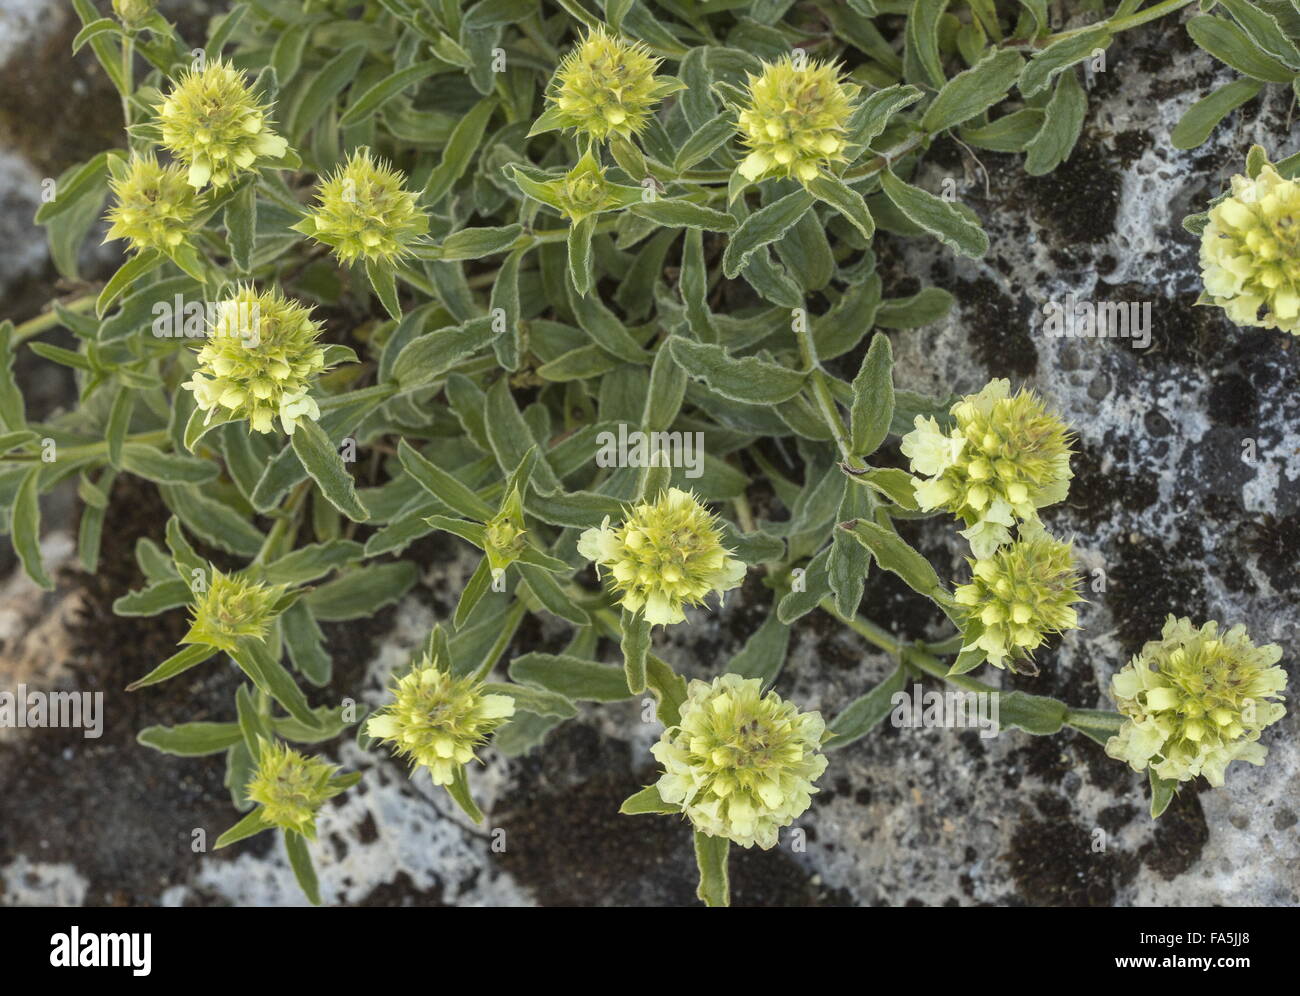 Hyssop-leaved mountain ironwort, Sideritis hyssopifolia in flower. Stock Photo